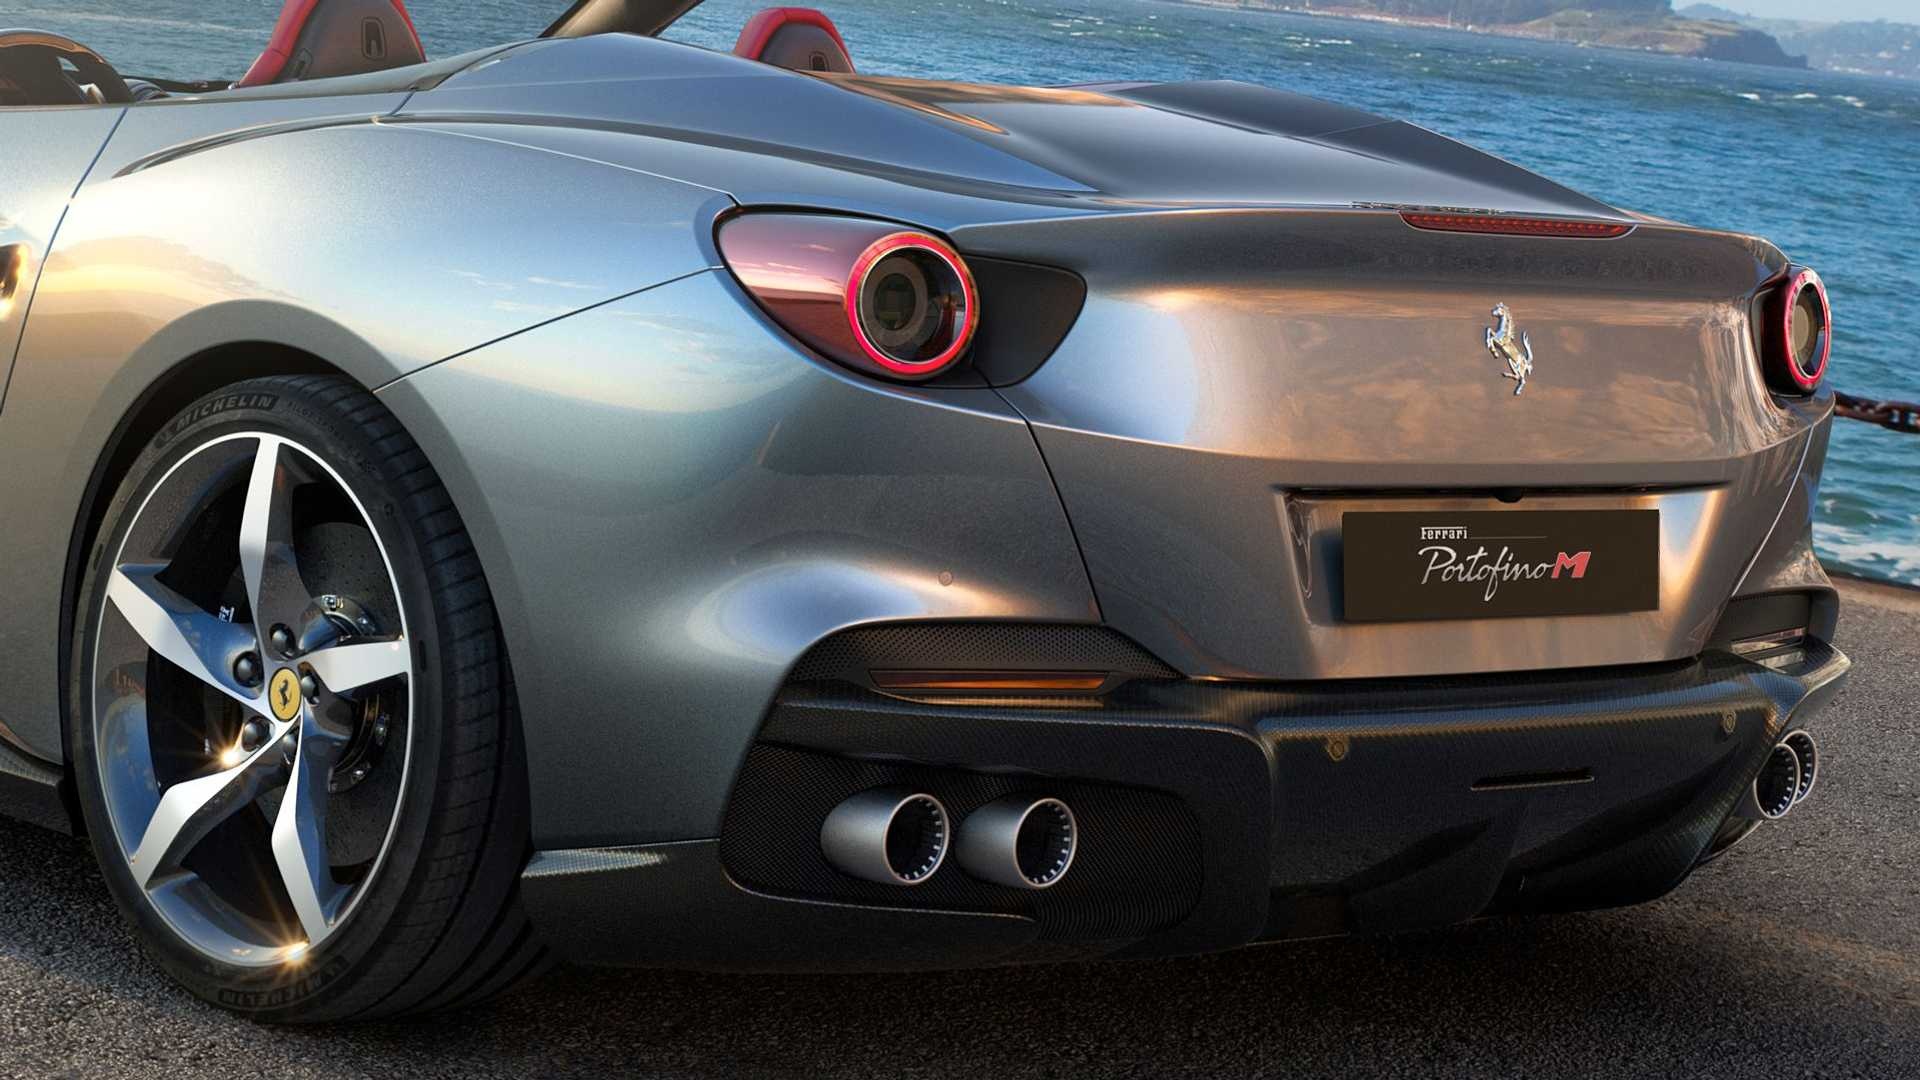 Ferrari Portofino M, Auto model, Power enhancement, Faster automatic, 1920x1080 Full HD Desktop